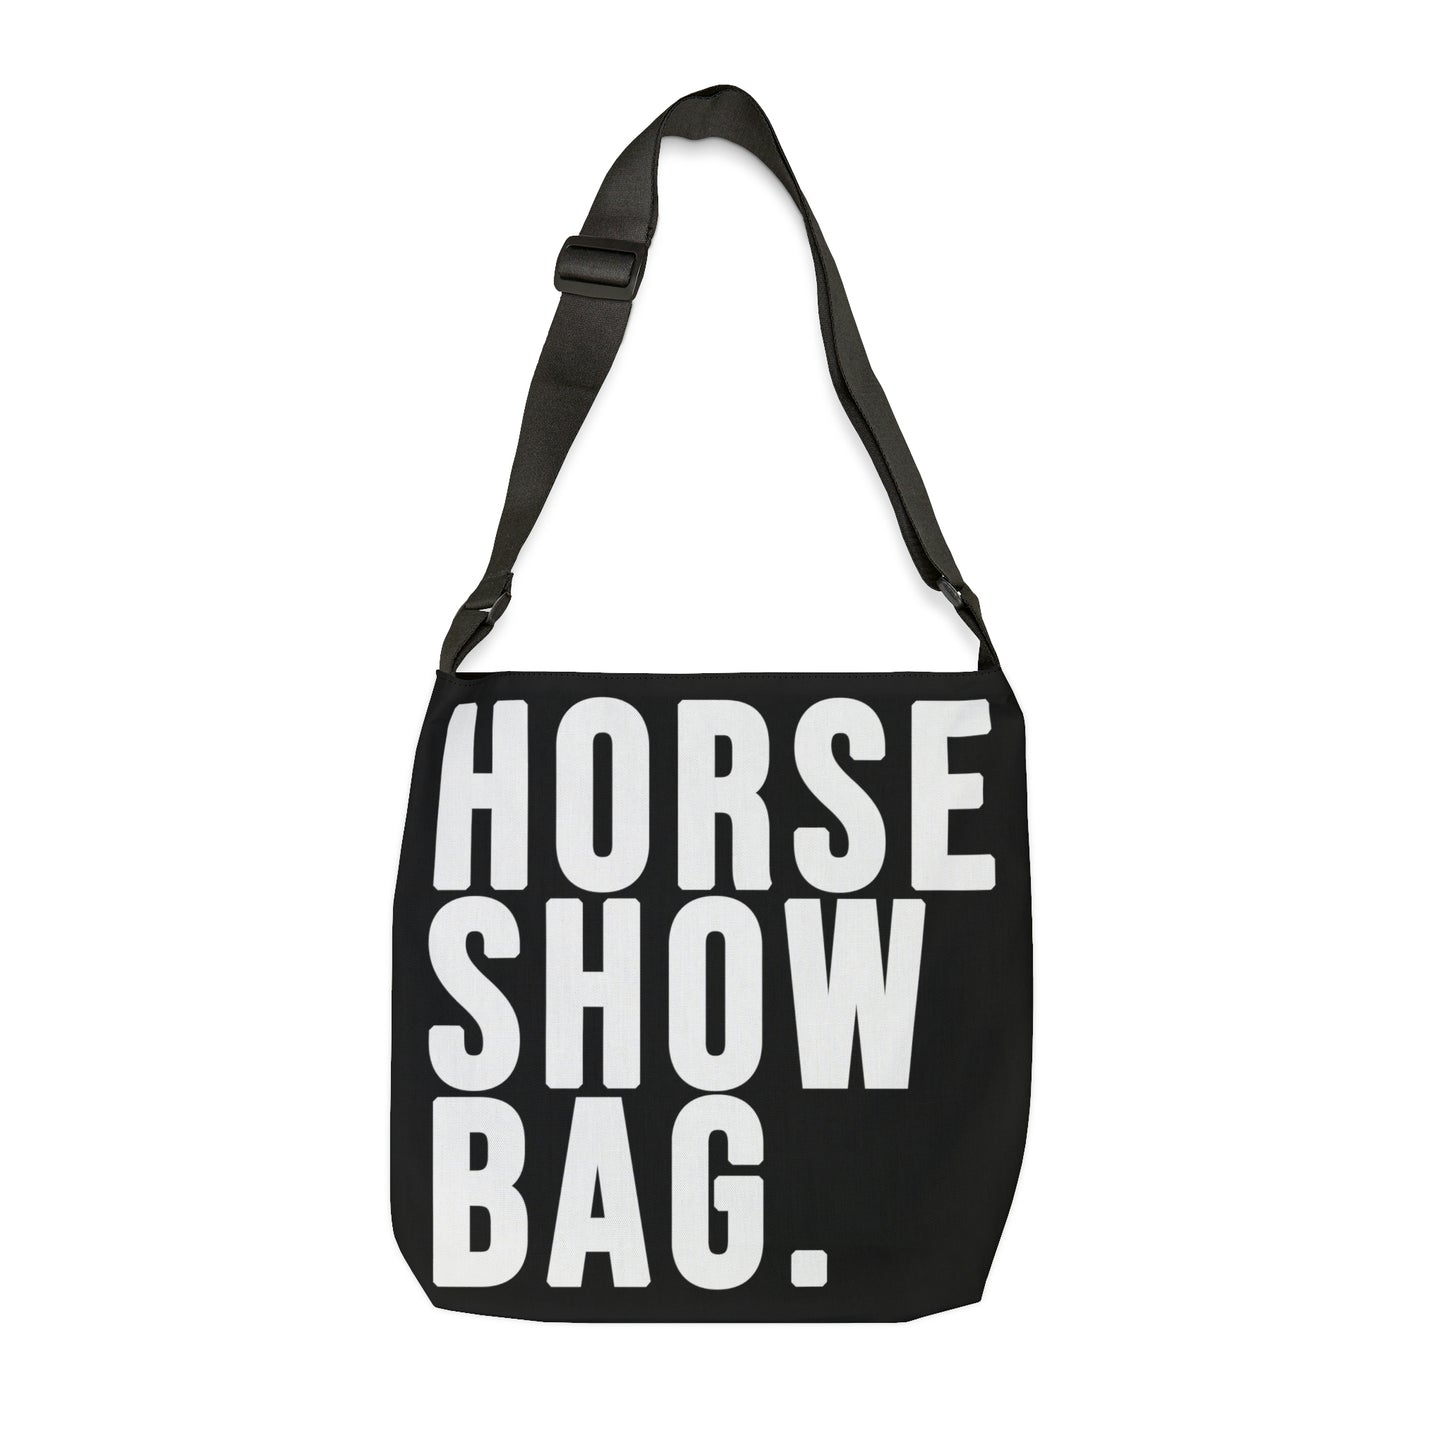 Horse Show Adjustable Tote Bag